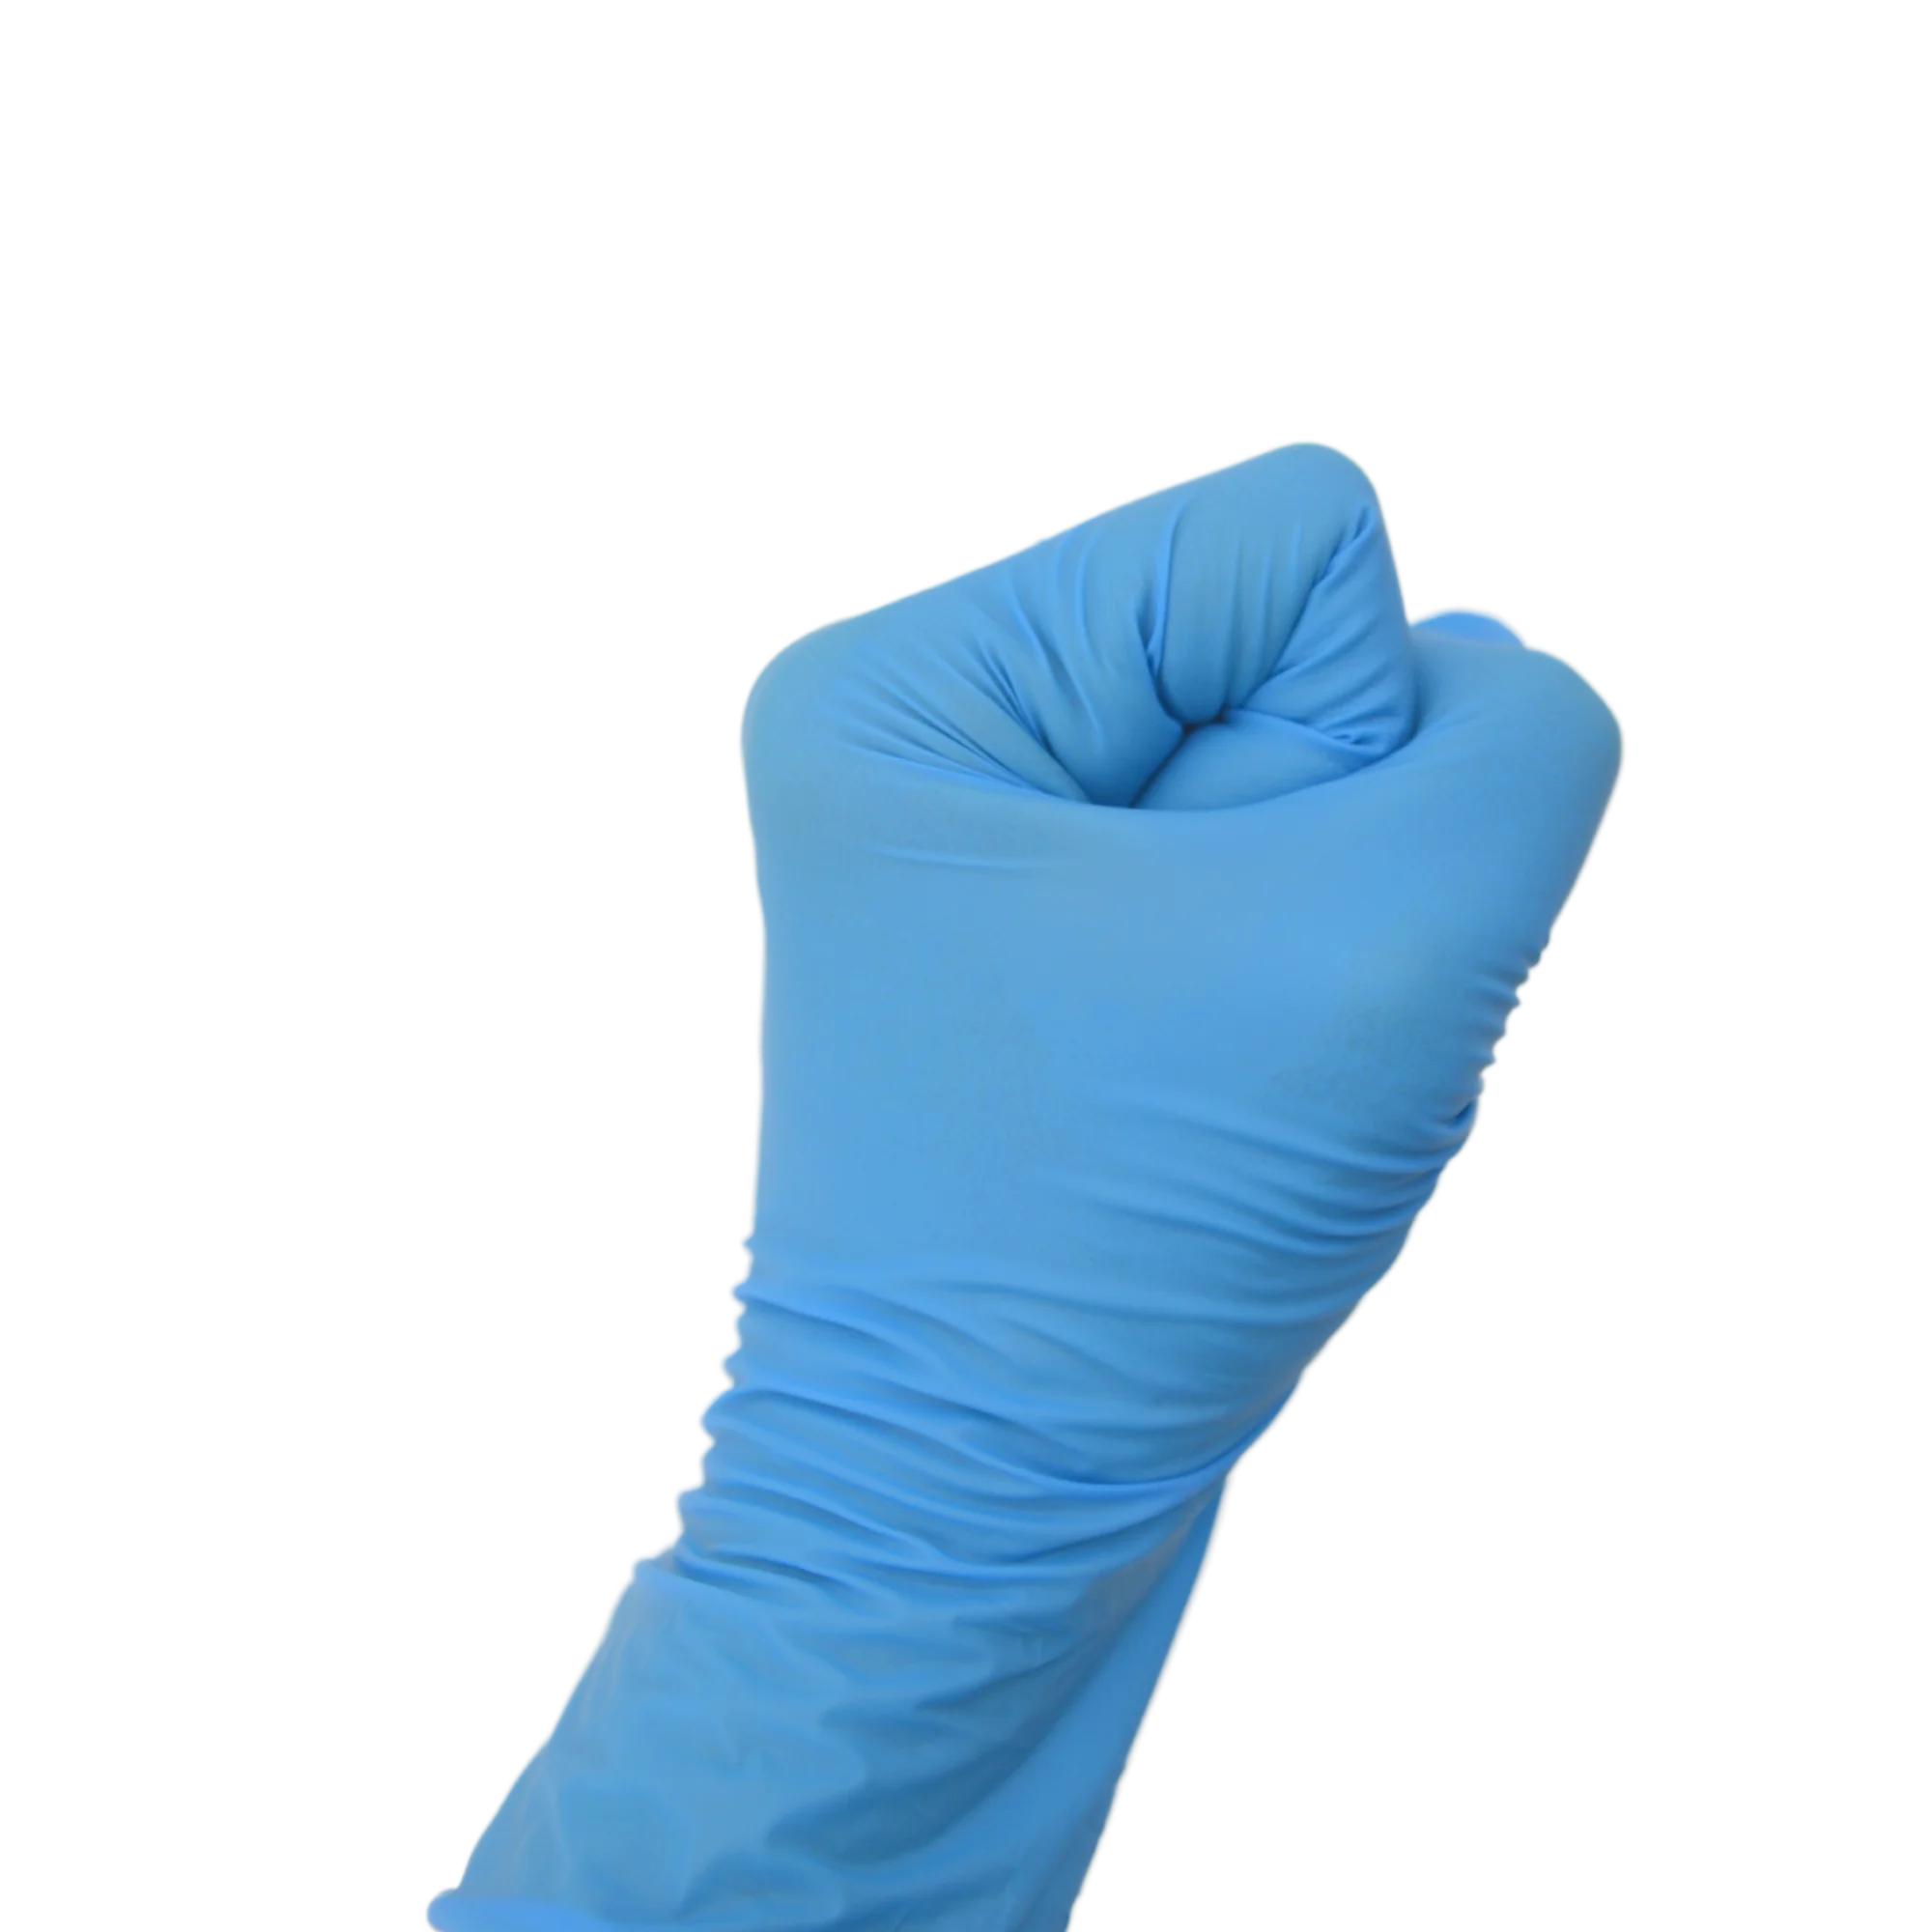 
Natrual Rubber Biodegradable Non Sterile Wholesale Food Grade Examination Powder Free Nitirle Latex Gloves 